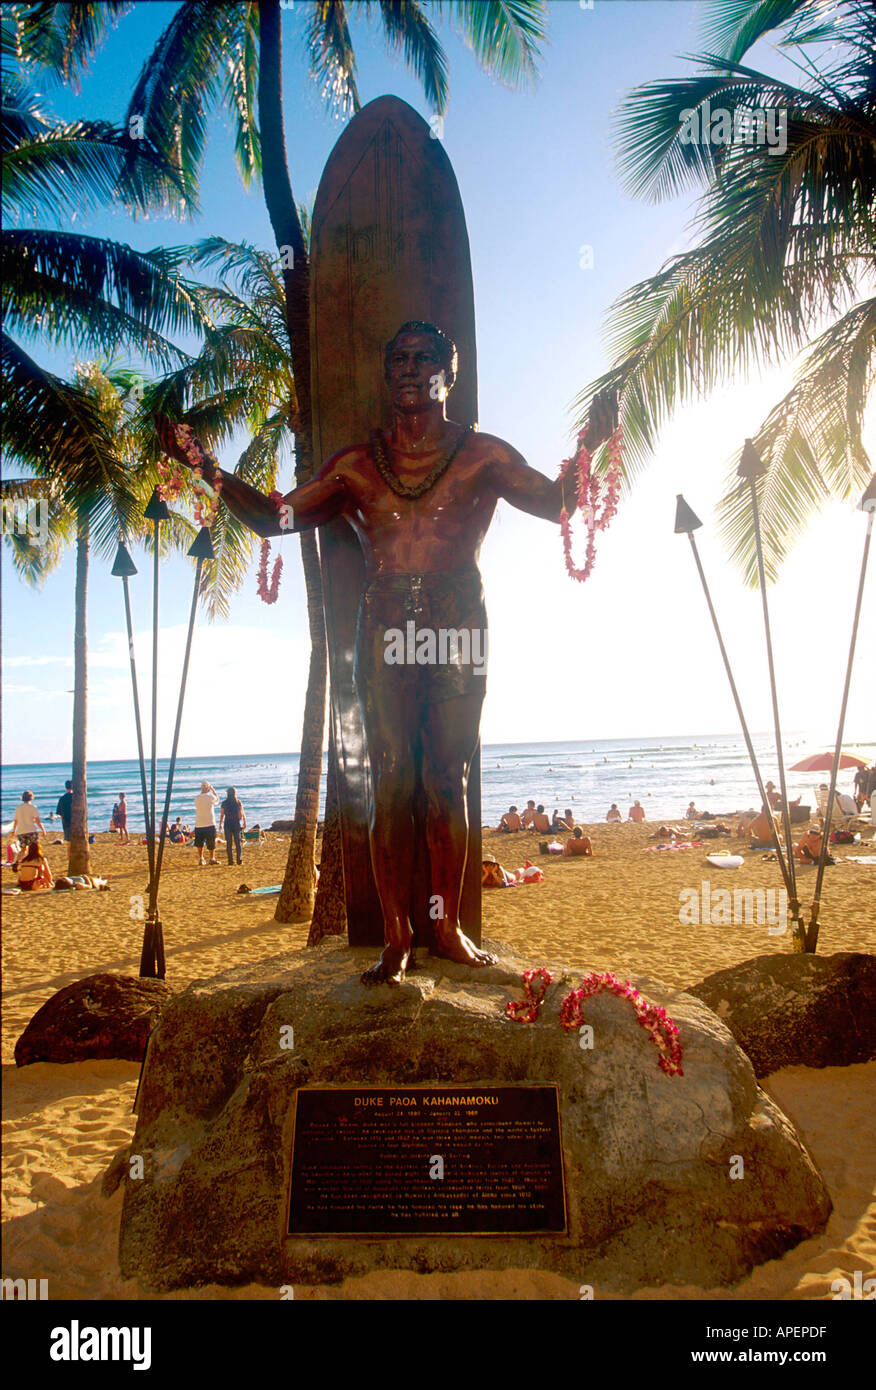 Statue of Duke Paoa Kahanamoku, Waikiki Beach, Hawaii, USA Stock Photo